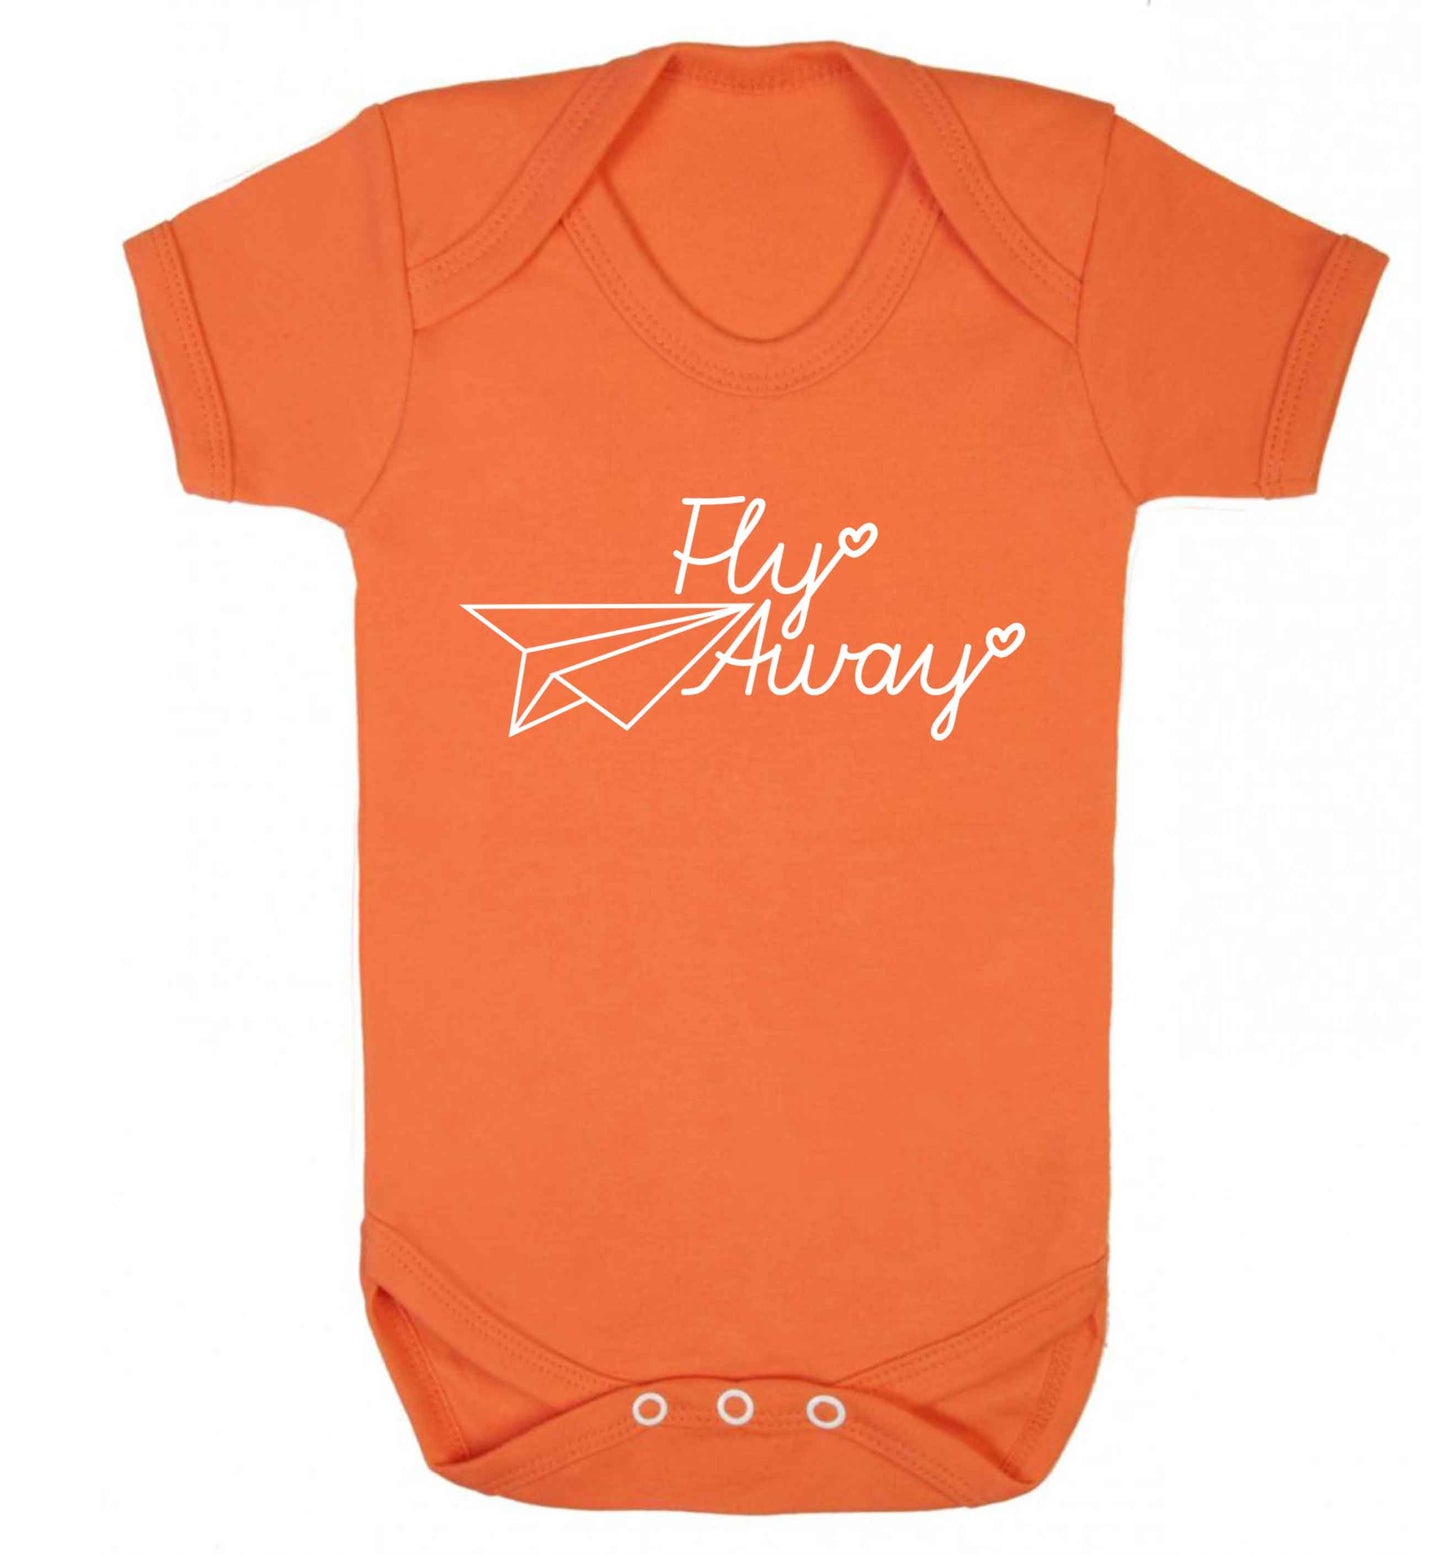 Fly away Baby Vest orange 18-24 months